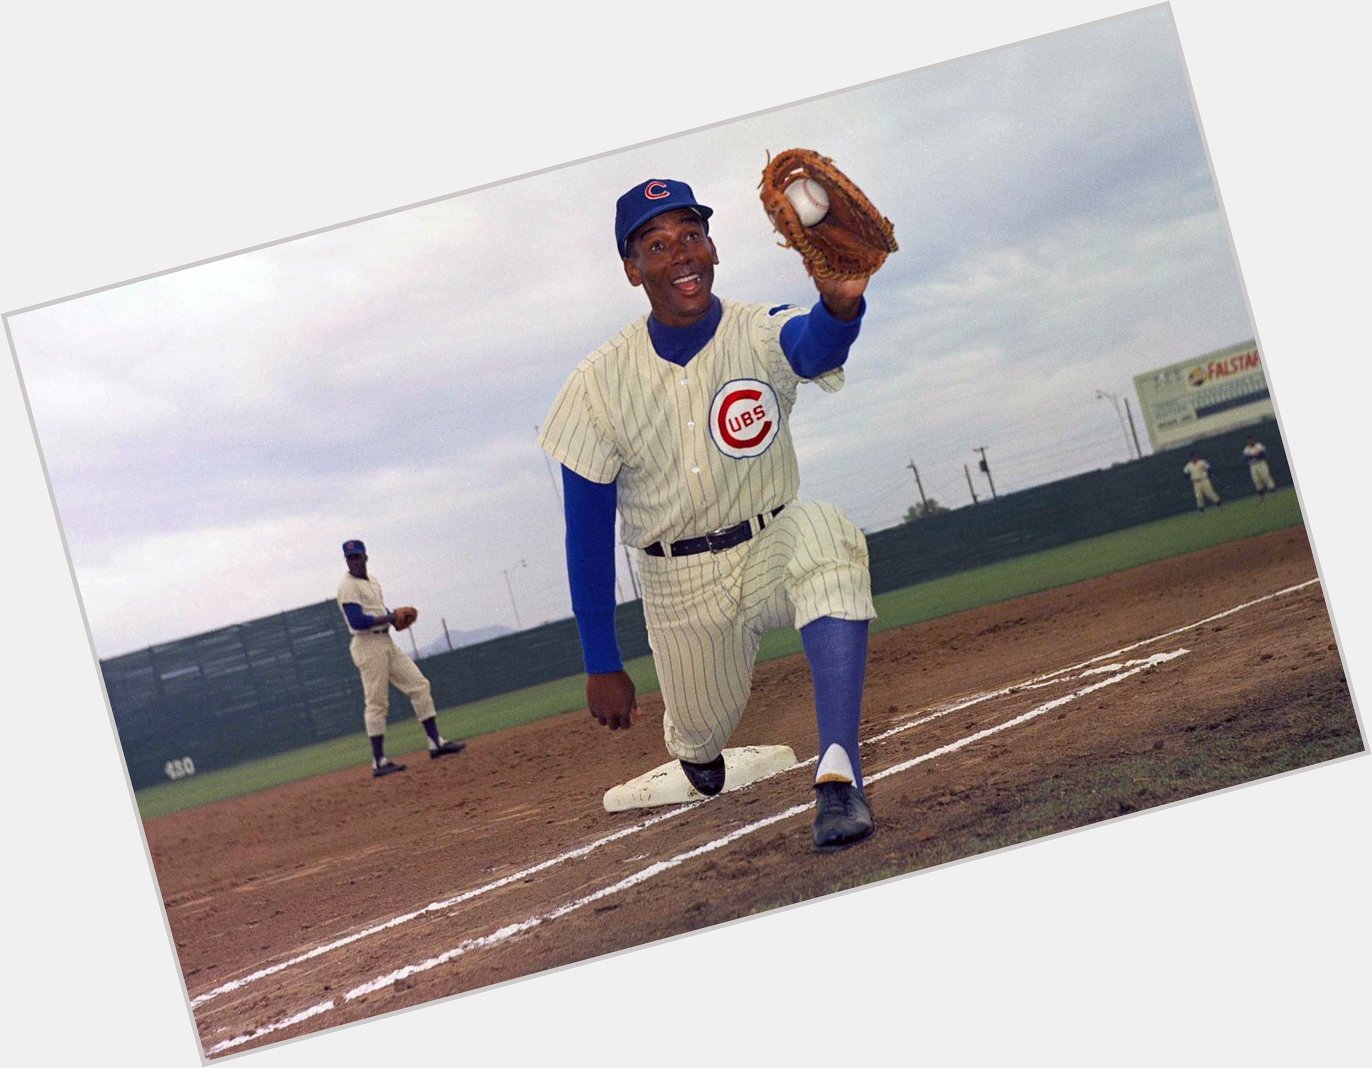 Happy Birthday to the forever legendary Mr. Cub, Ernie Banks. 